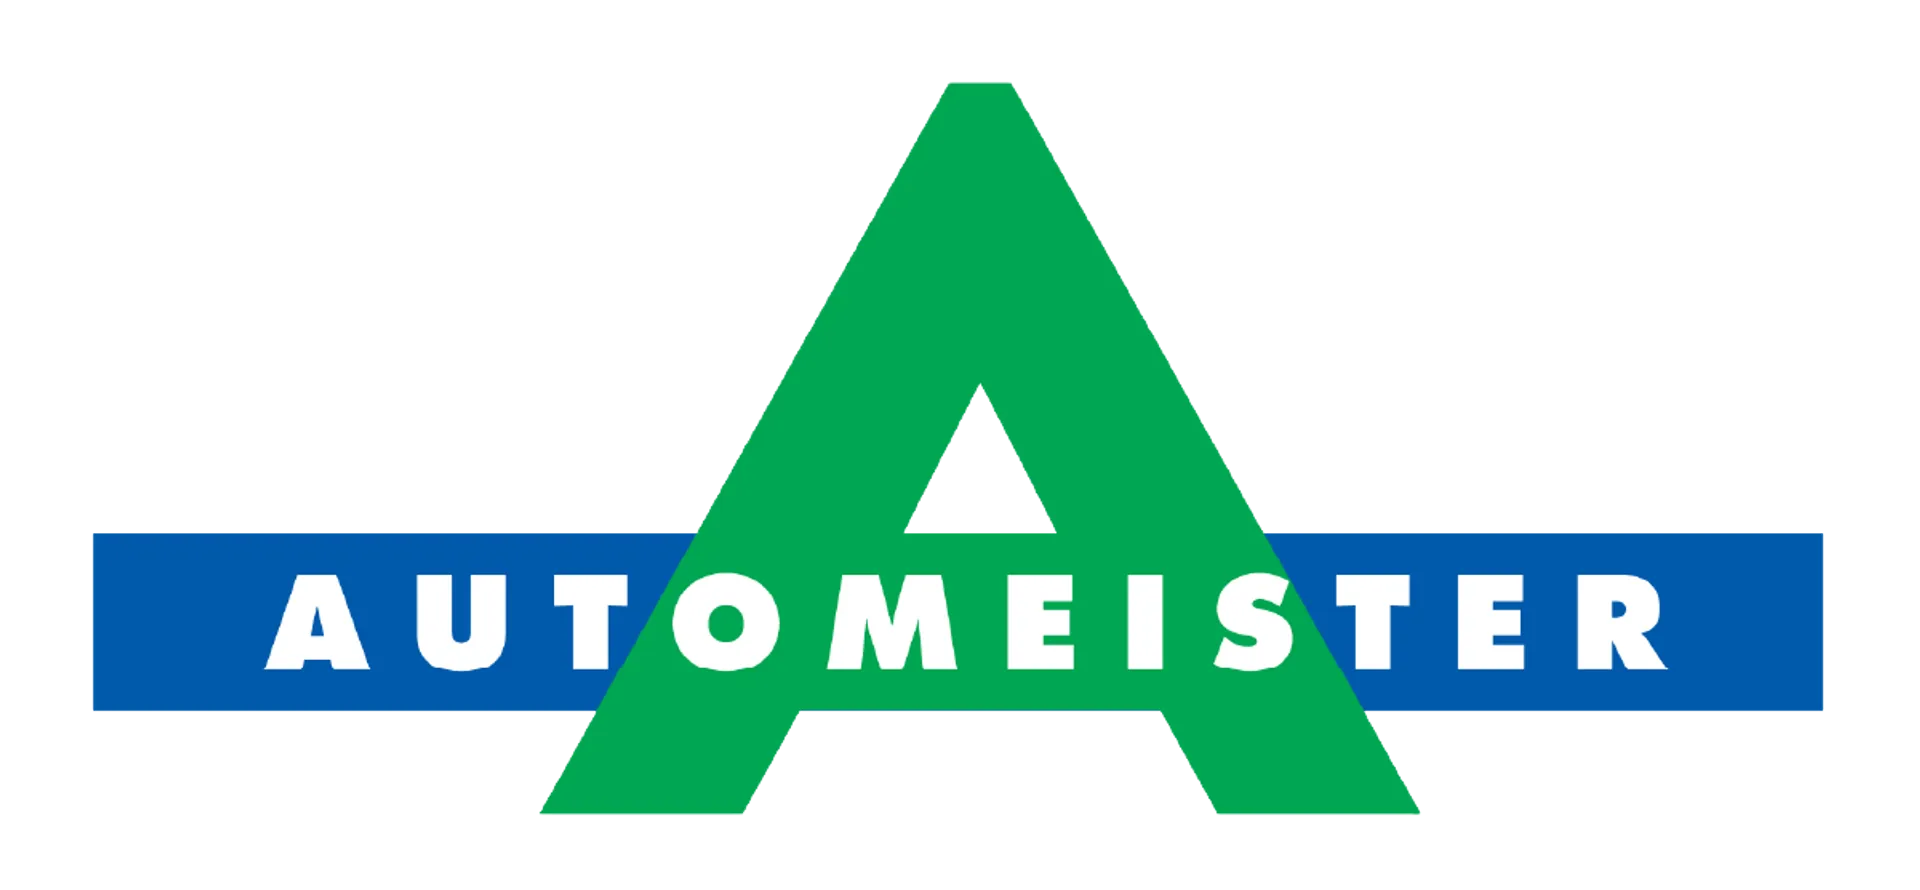 AUTOMEISTER logo